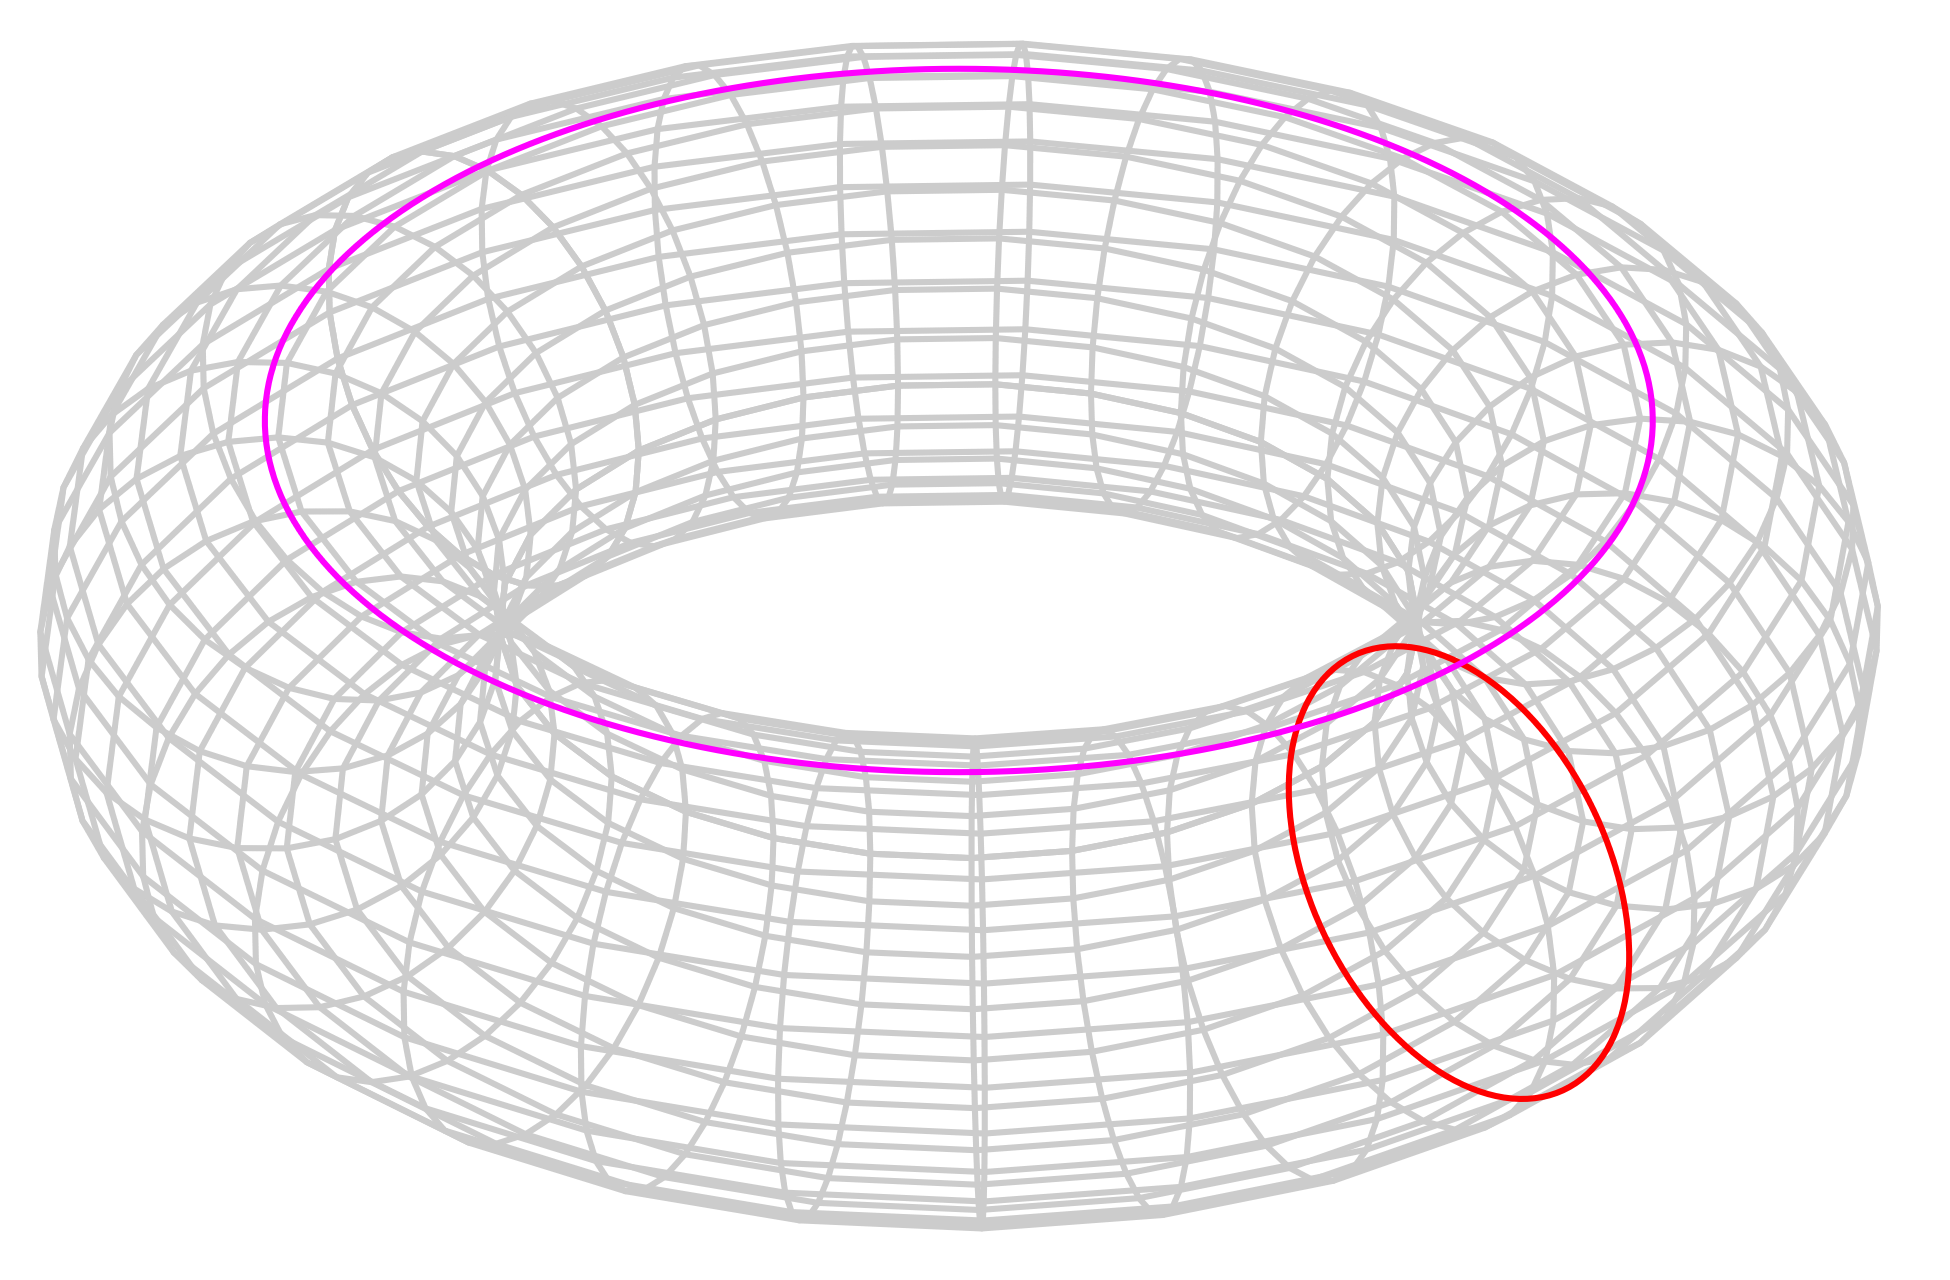 image of a torus